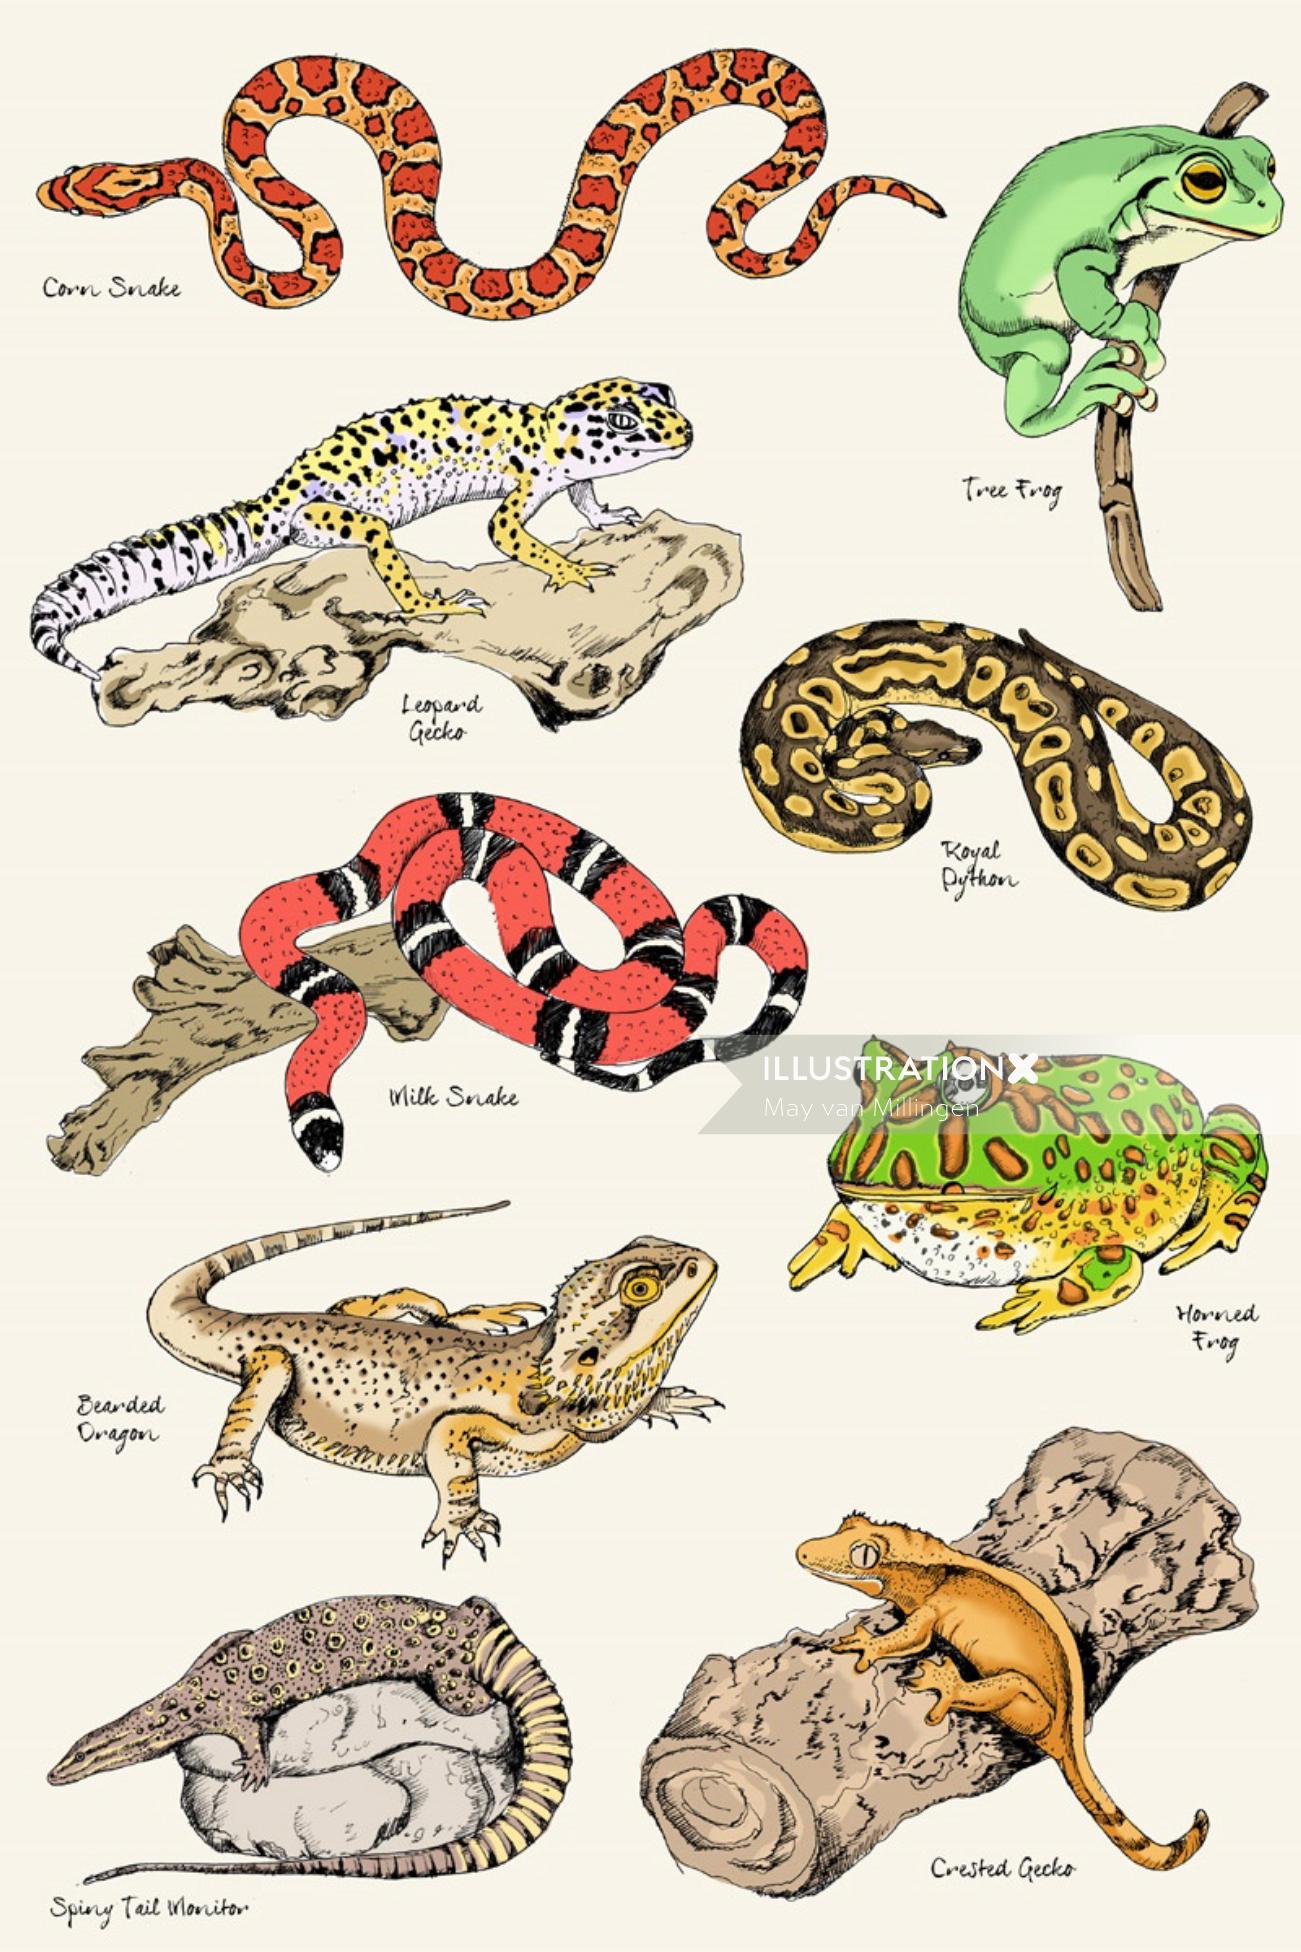 Reptiles illustration by May van Millingen